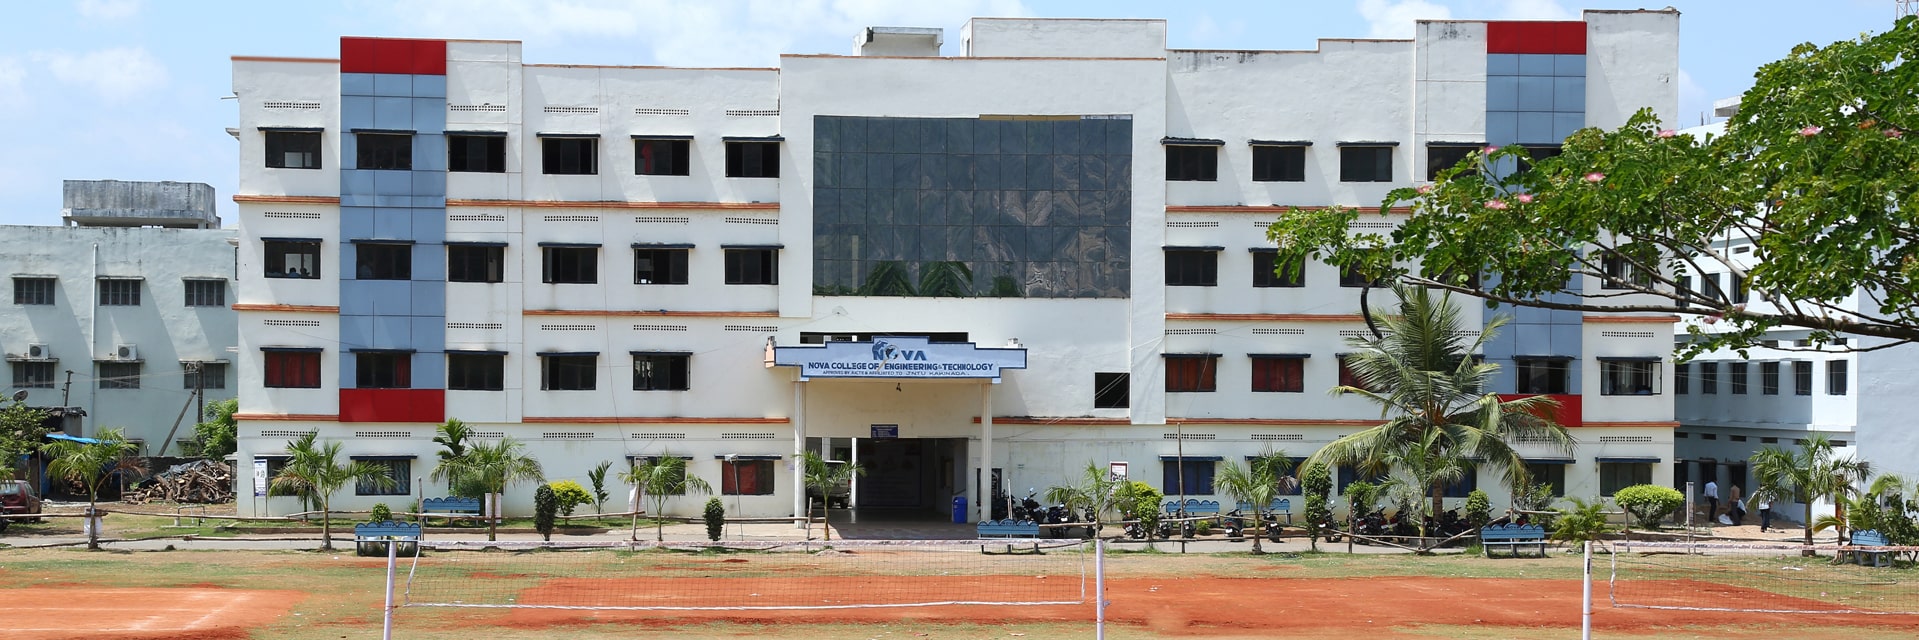 Nova College of Engineering and Technology Vijayawada, Krishna Image